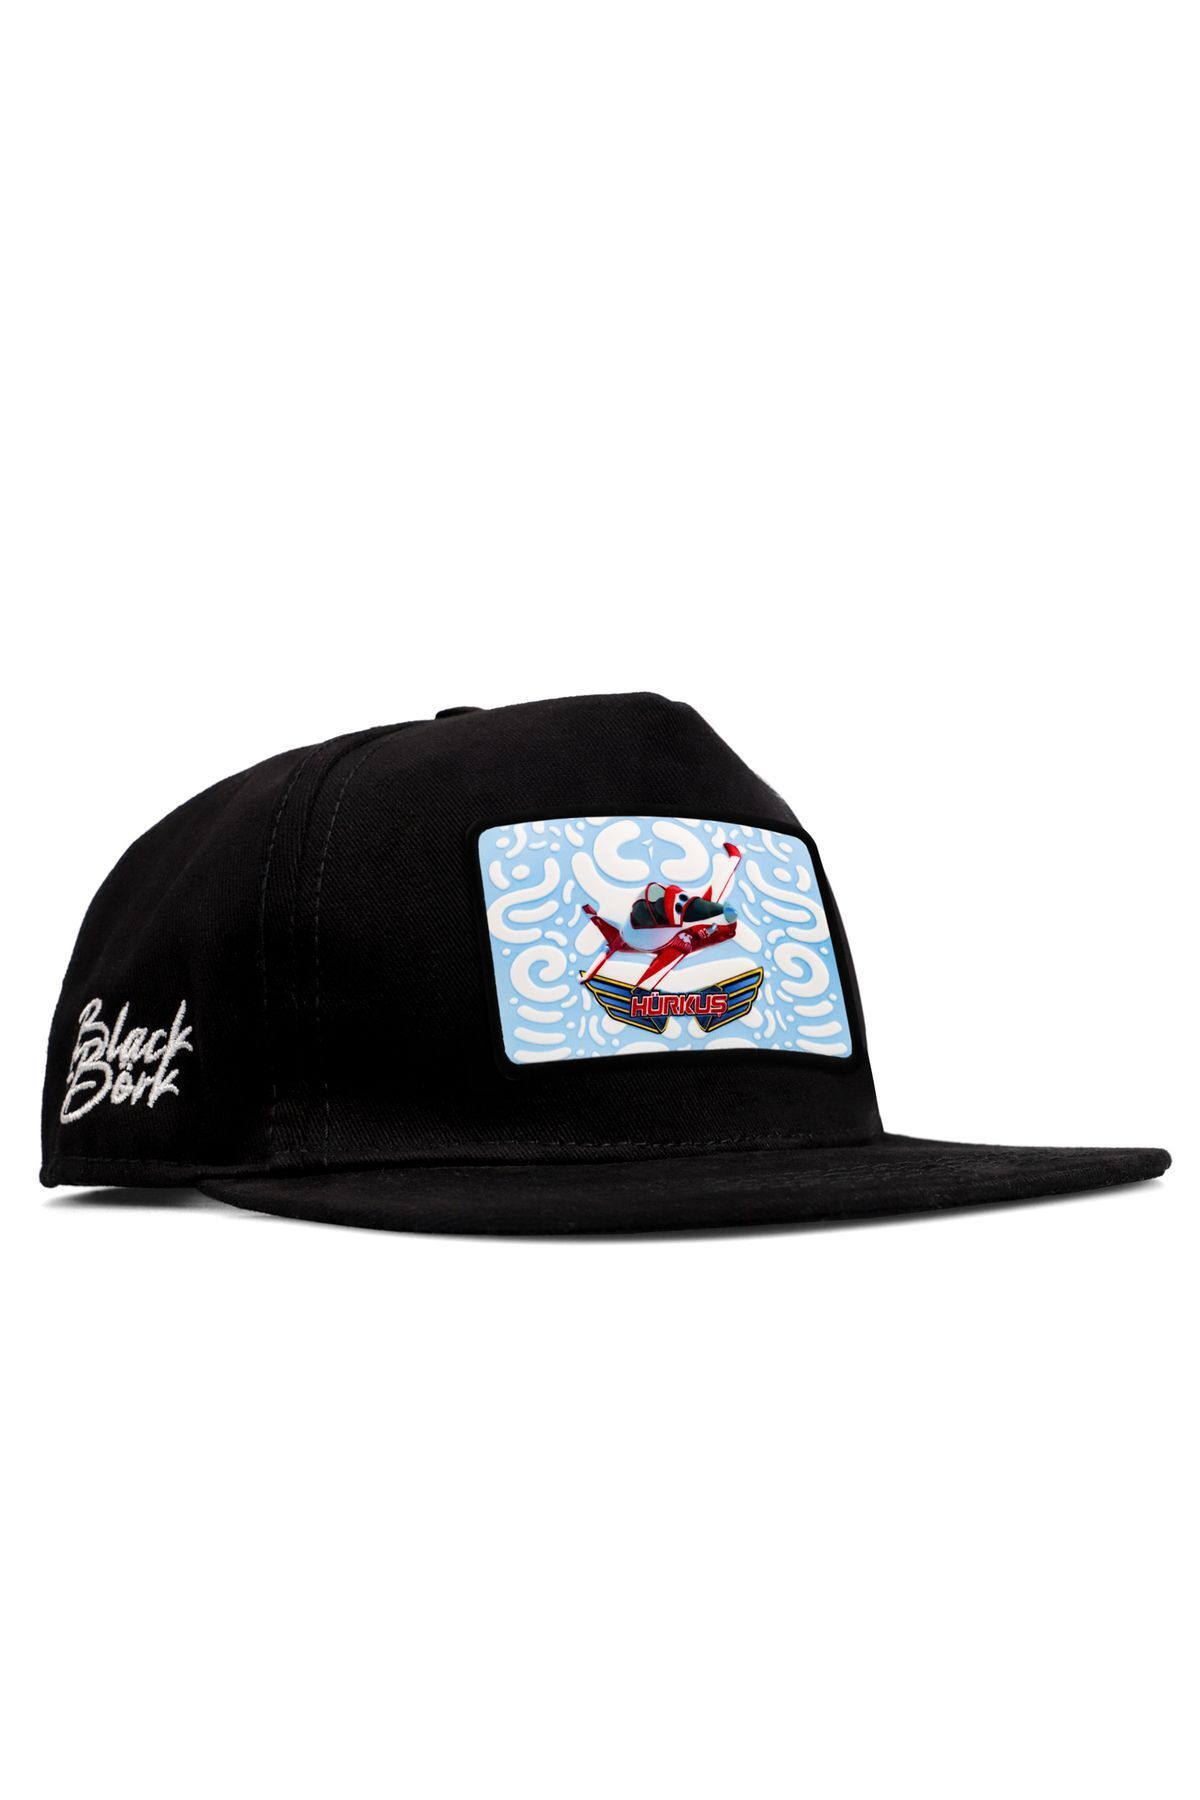 BlackBörk V2 Hip Hop Kids Bulut Hürkuş Lisanlı Siyah Çocuk Şapka